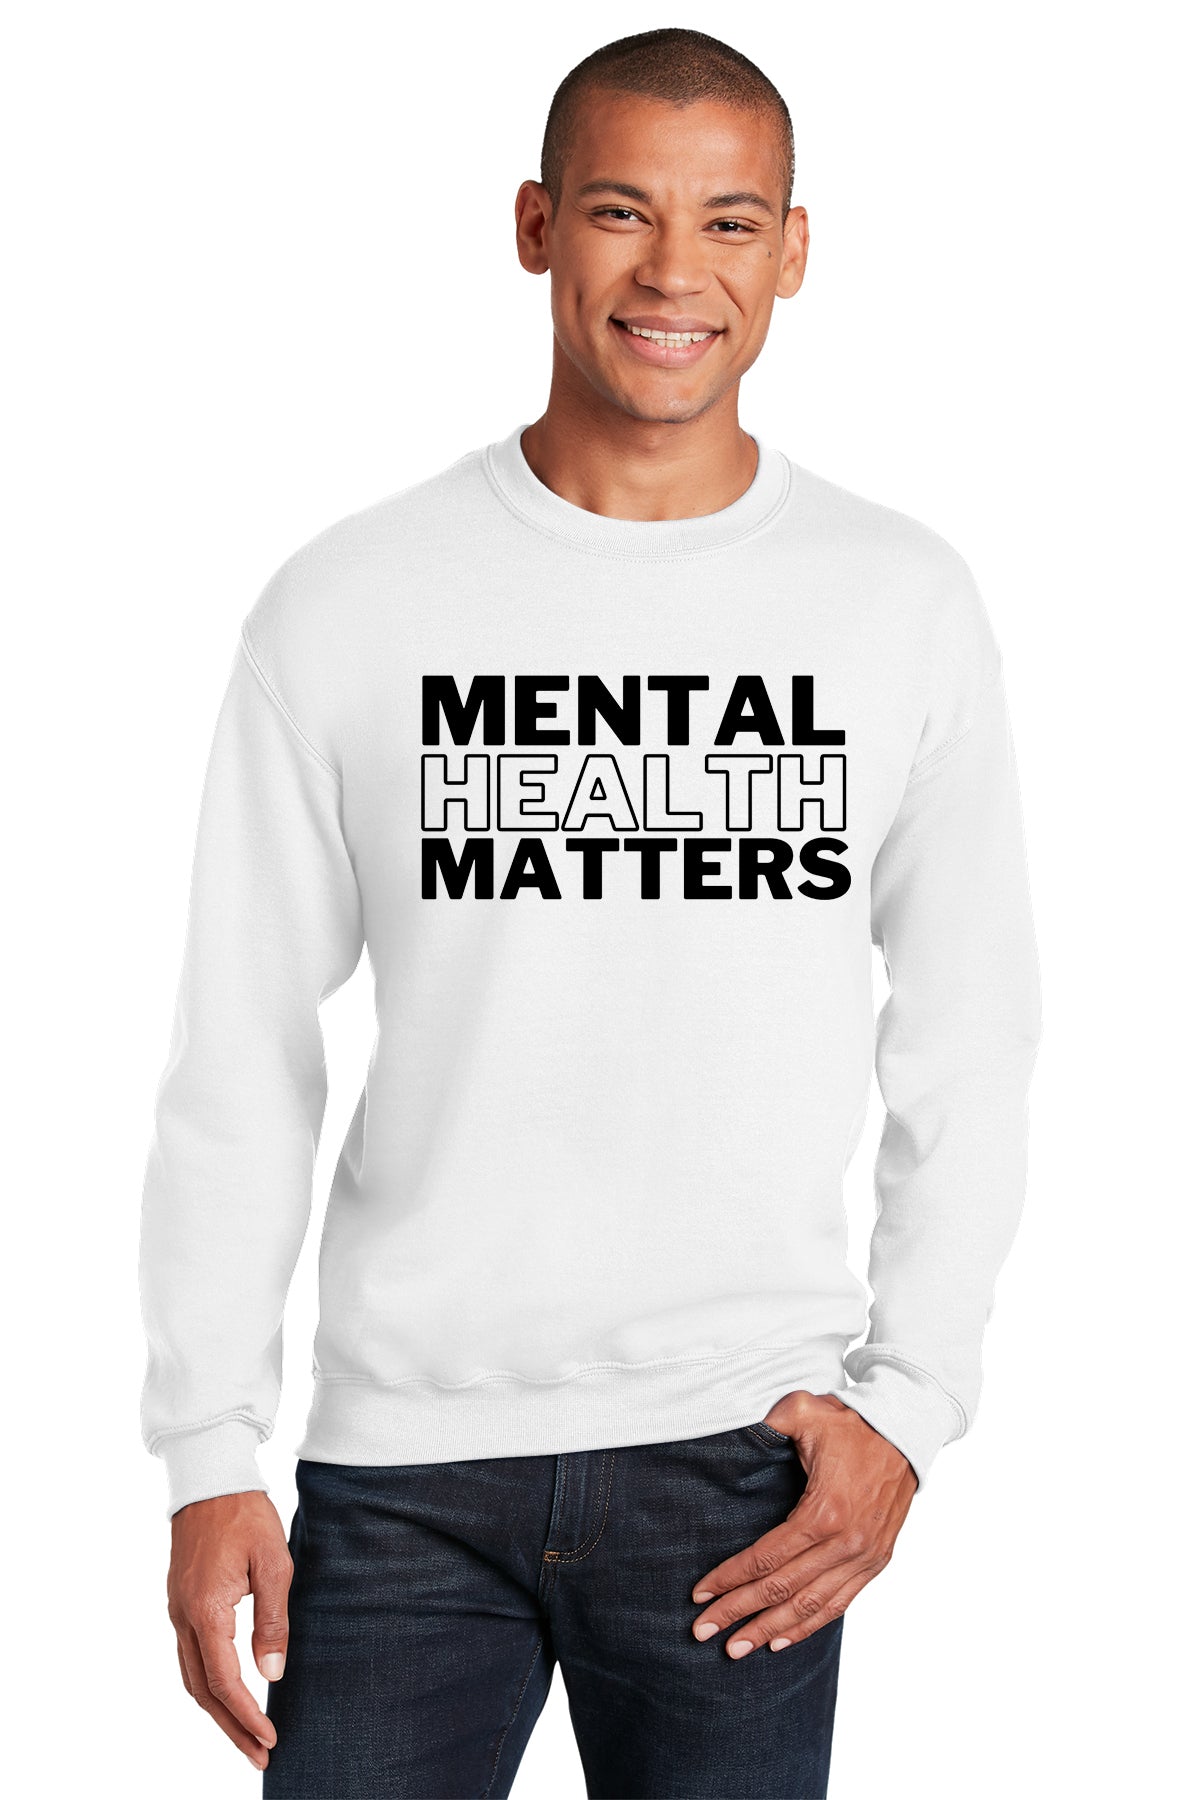 'Mental Health Matters' Block Printed Graphic Sweatshirt: Prep Obsessed x Weather With Lauren (Ships in 2-3 Weeks)